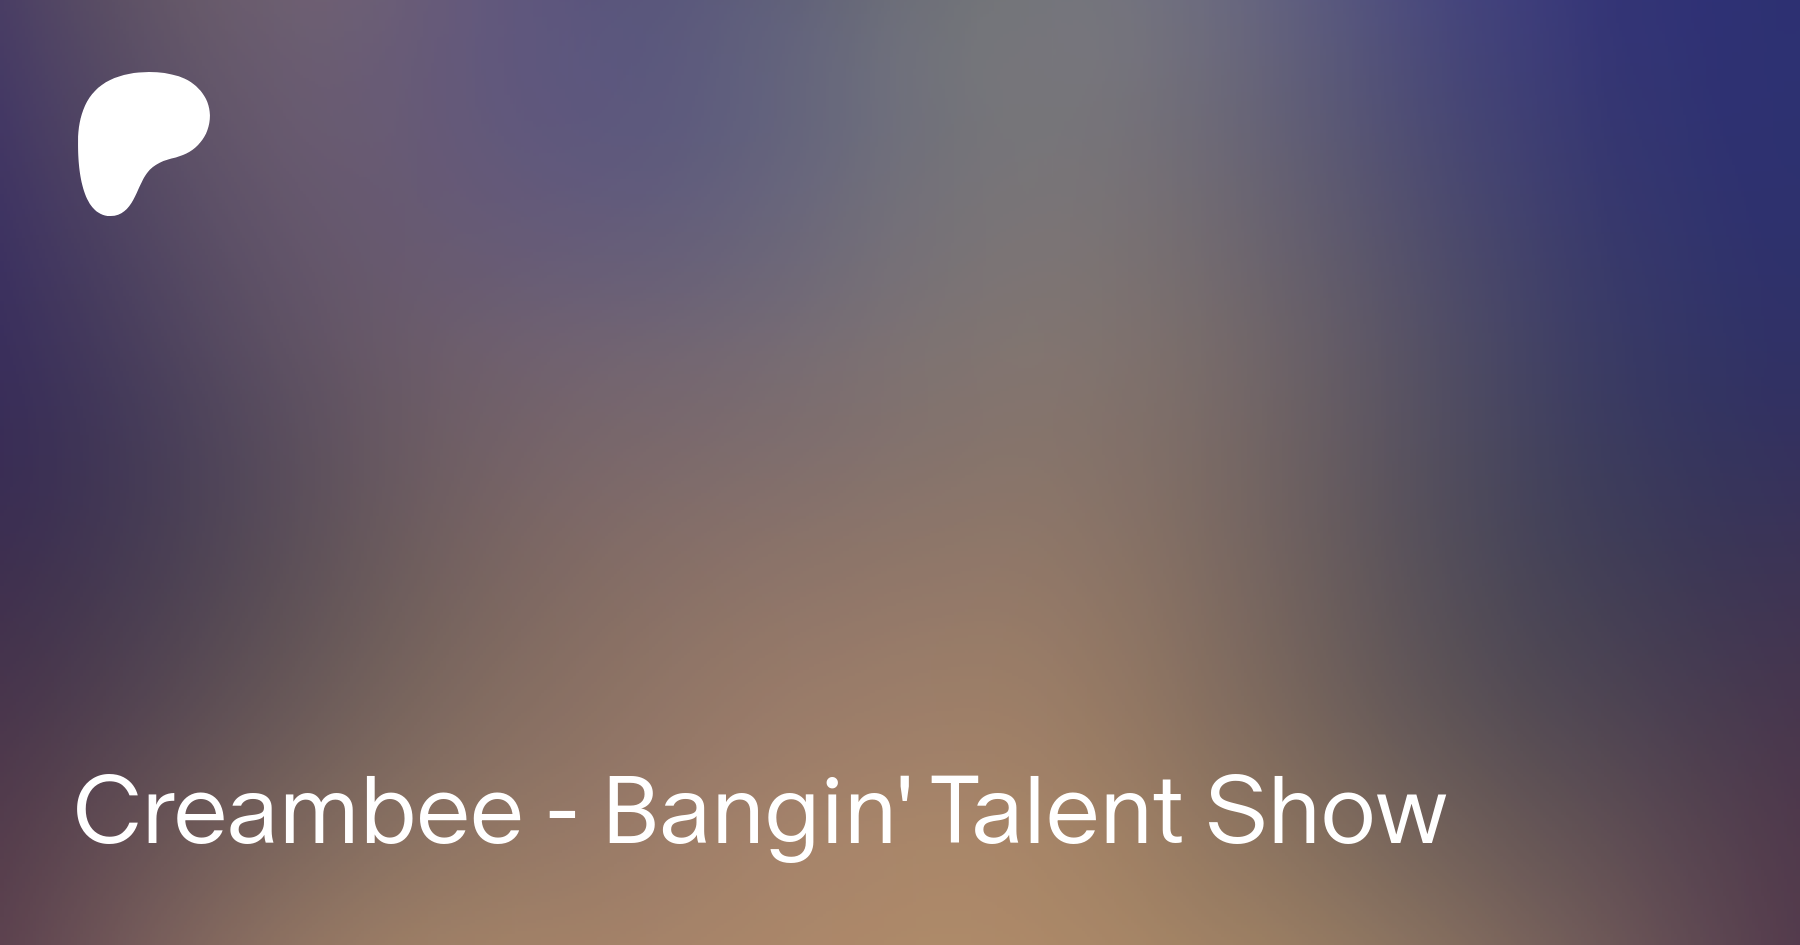 Bangin talent show